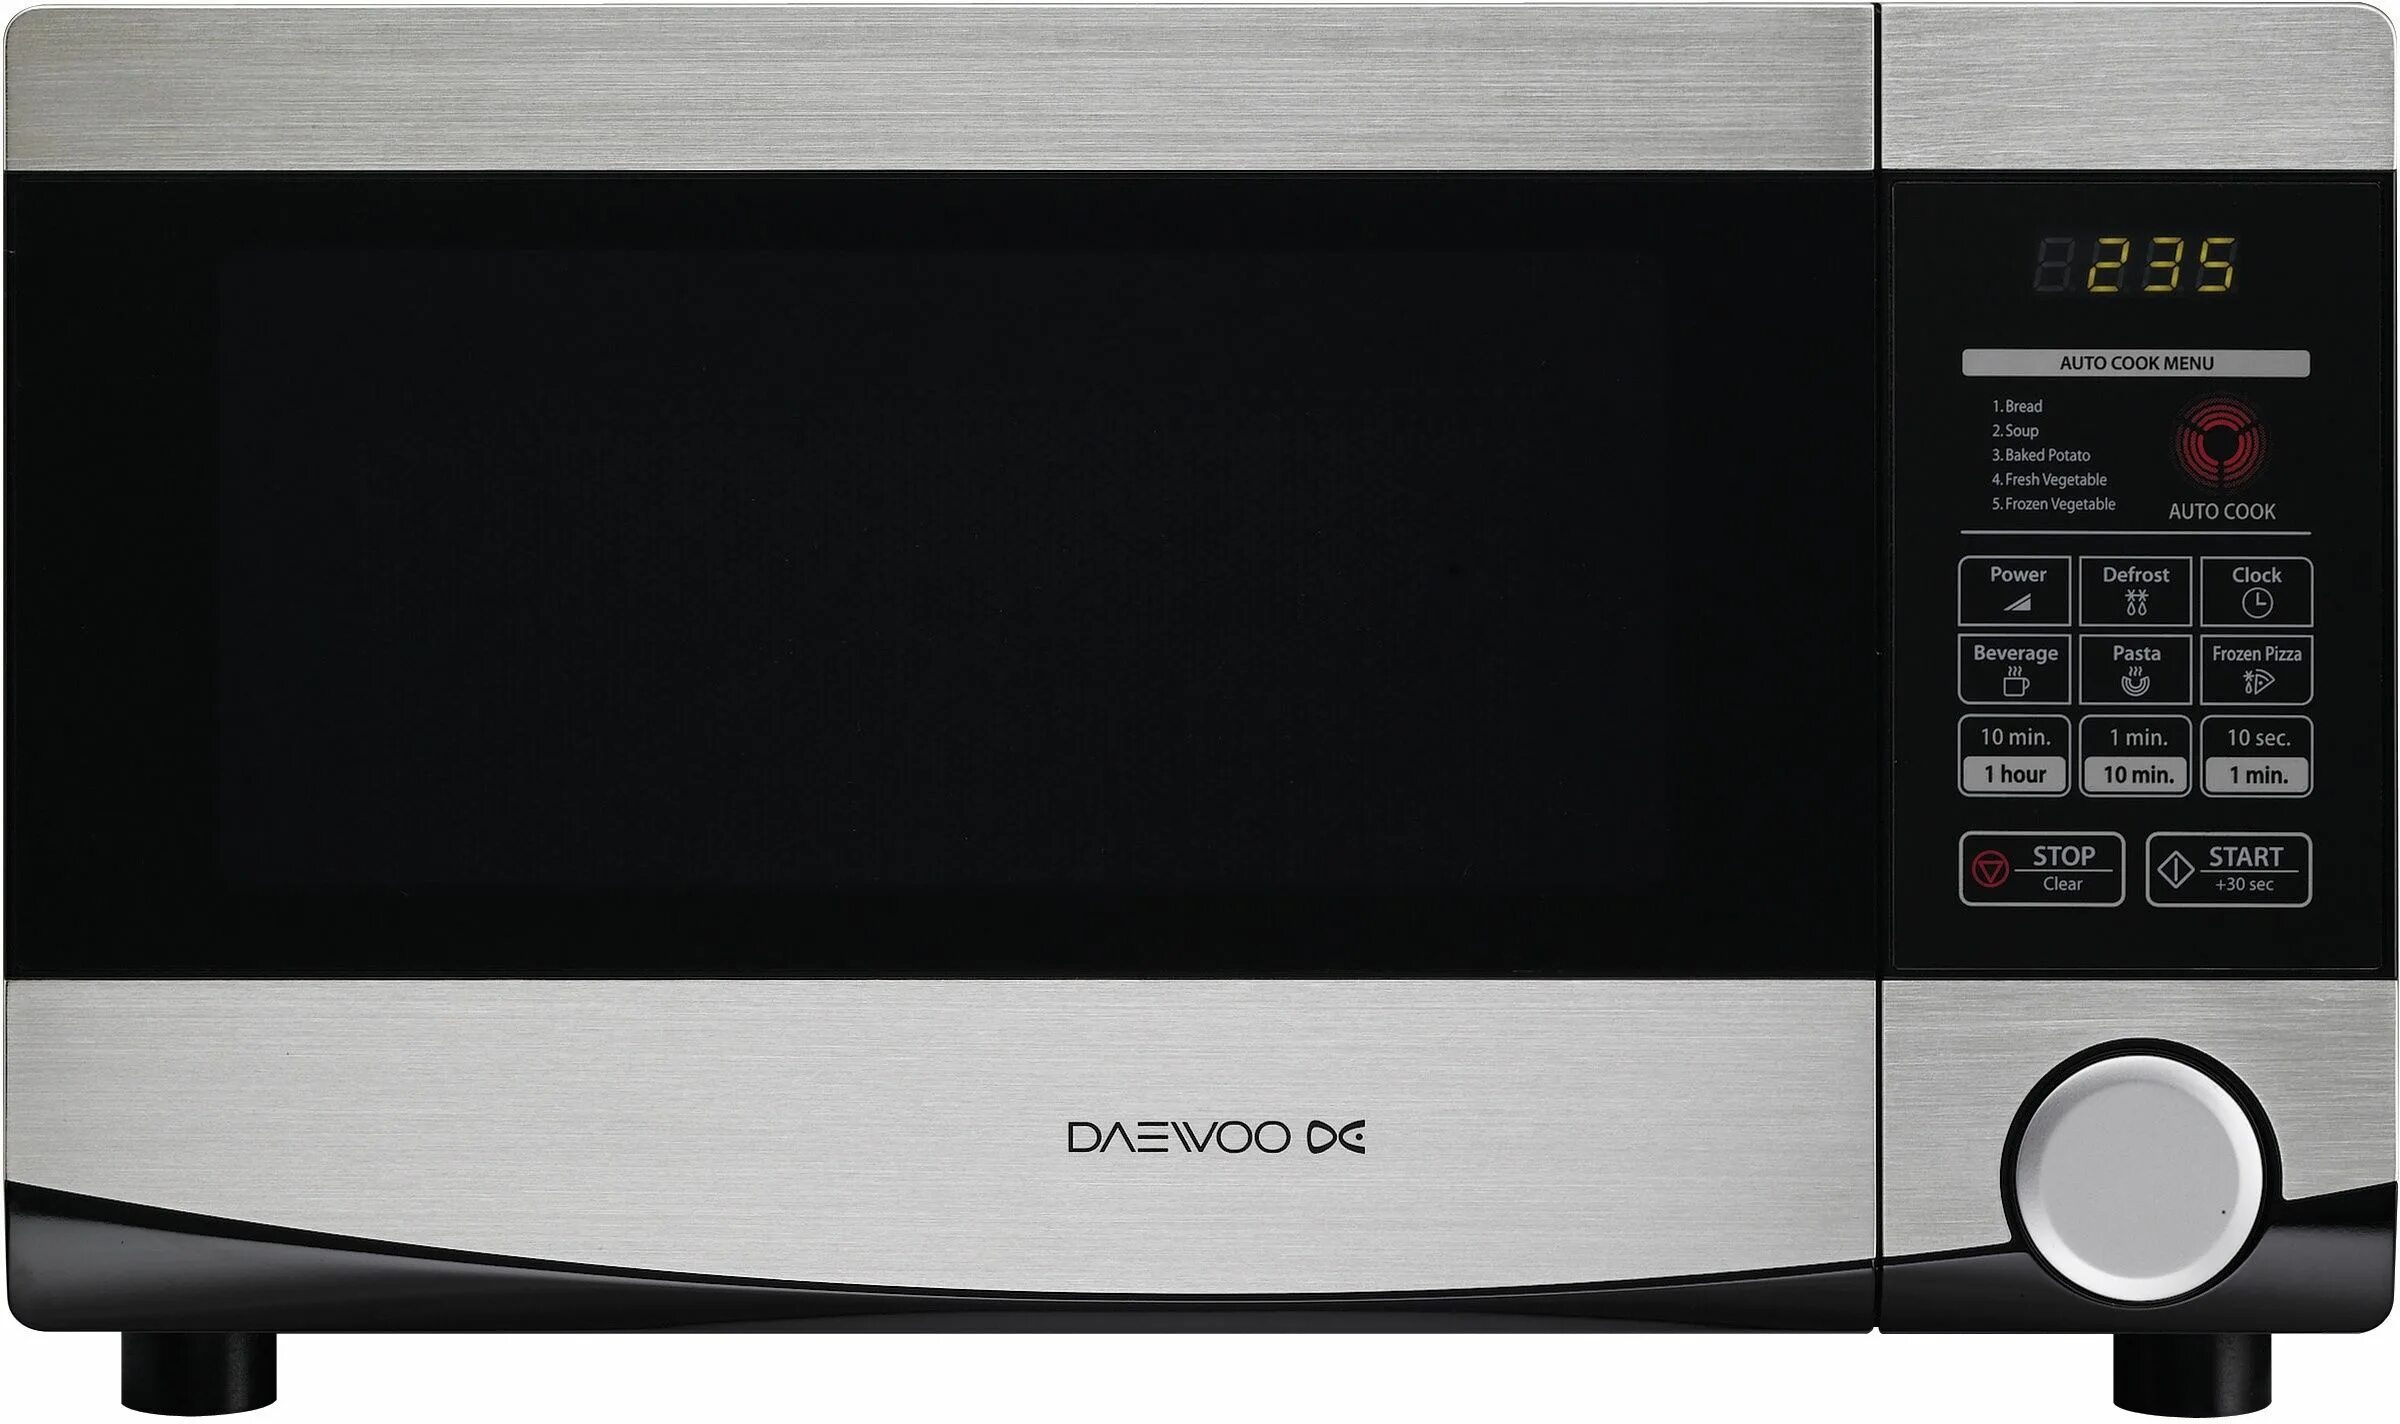 Б свч. Микроволновка Daewoo Kor 6l45. Микроволновая печь Daewoo Electronics KQG-6ccr. Микроволновая печь Daewoo Electronics Kor-664bb. Микроволновая печь Daewoo Microwave.